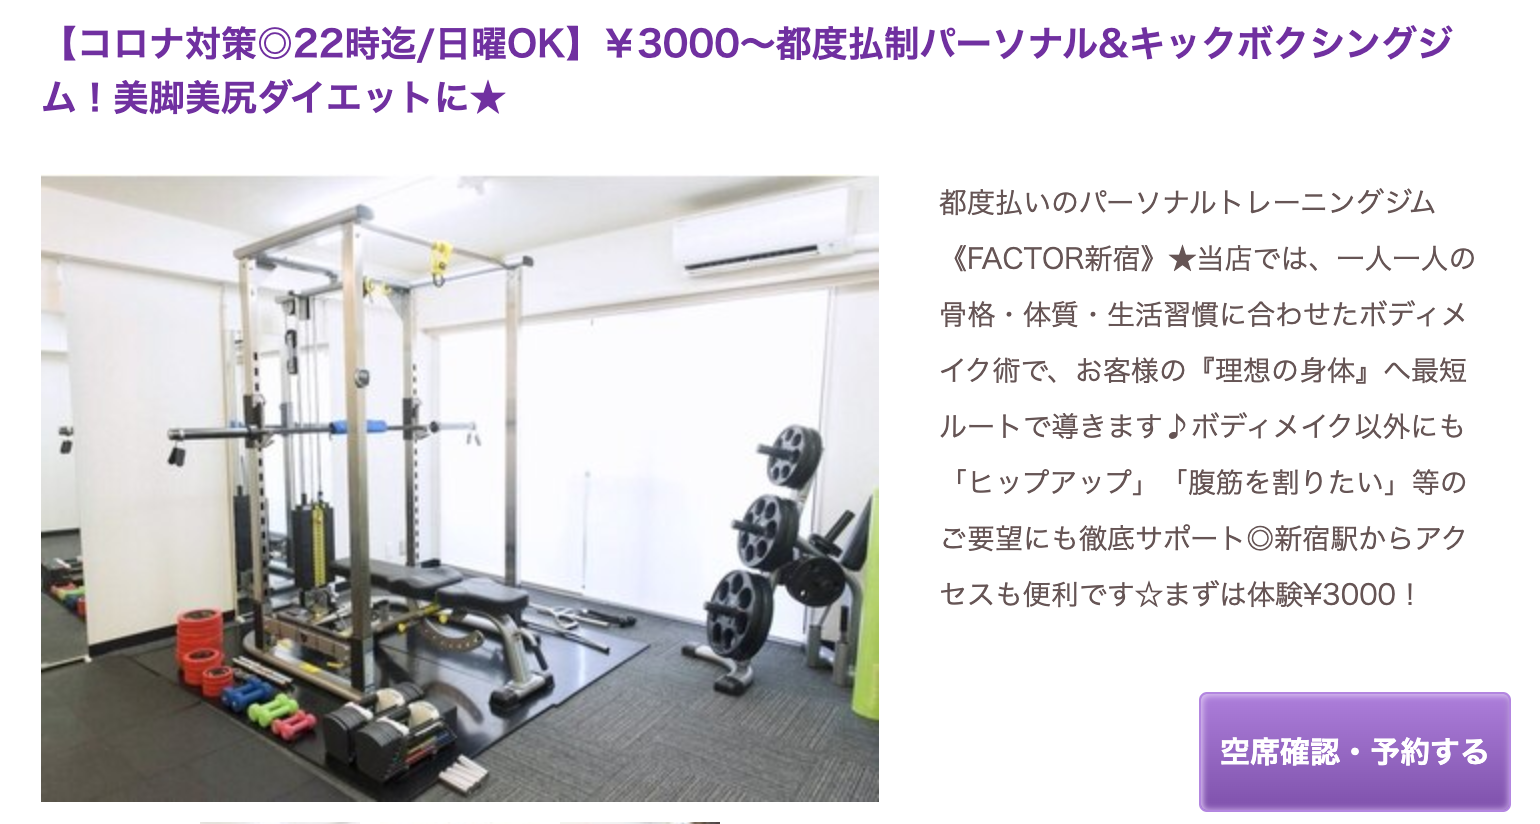 Studio Factor 新宿店